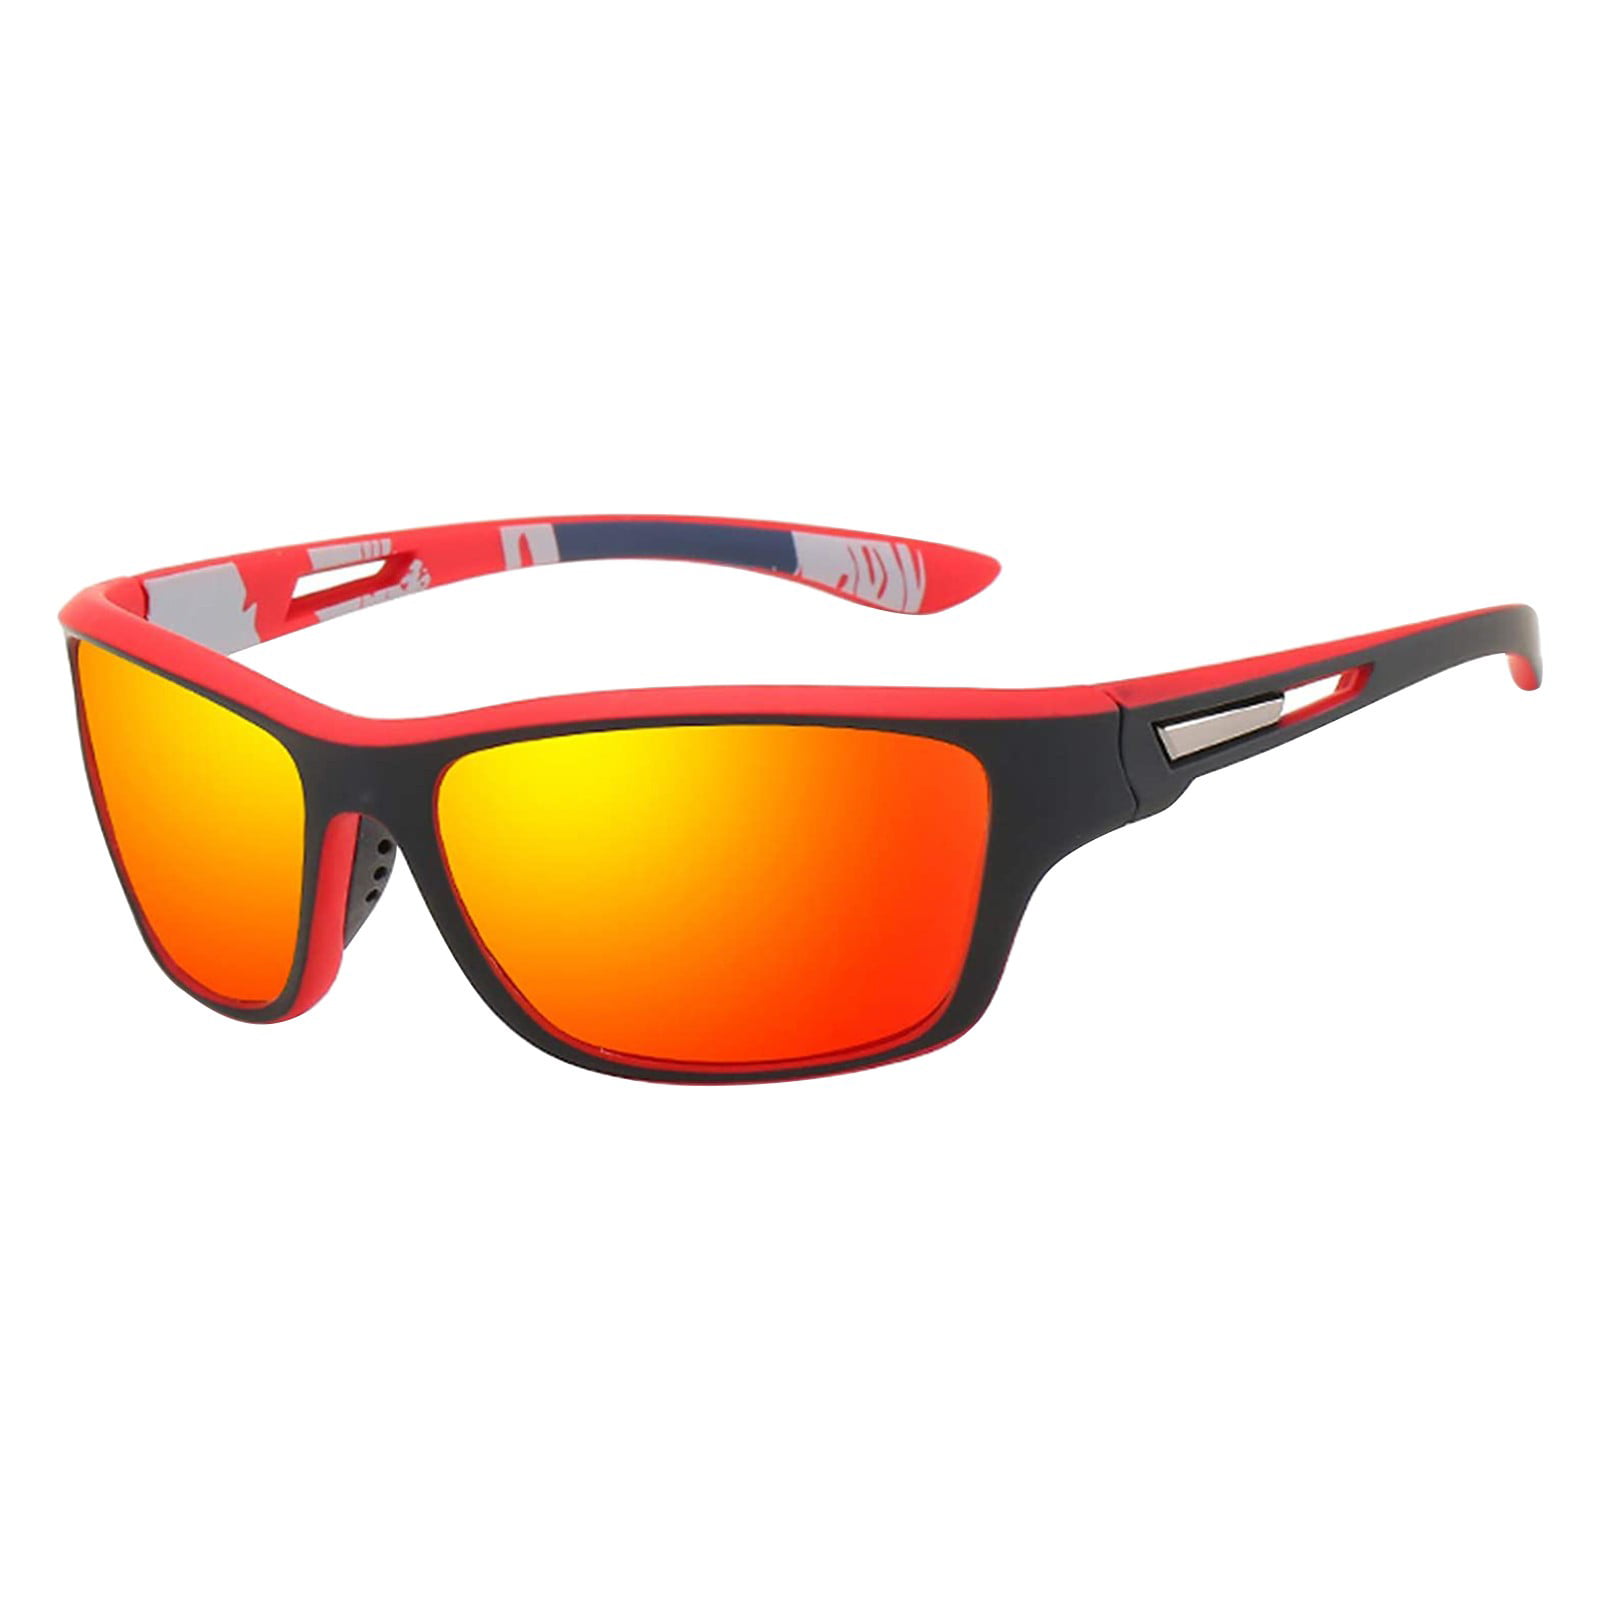 Camping Driving glasses Cycling Running Outdoor Sports Sunglasses Eyewear UV400 